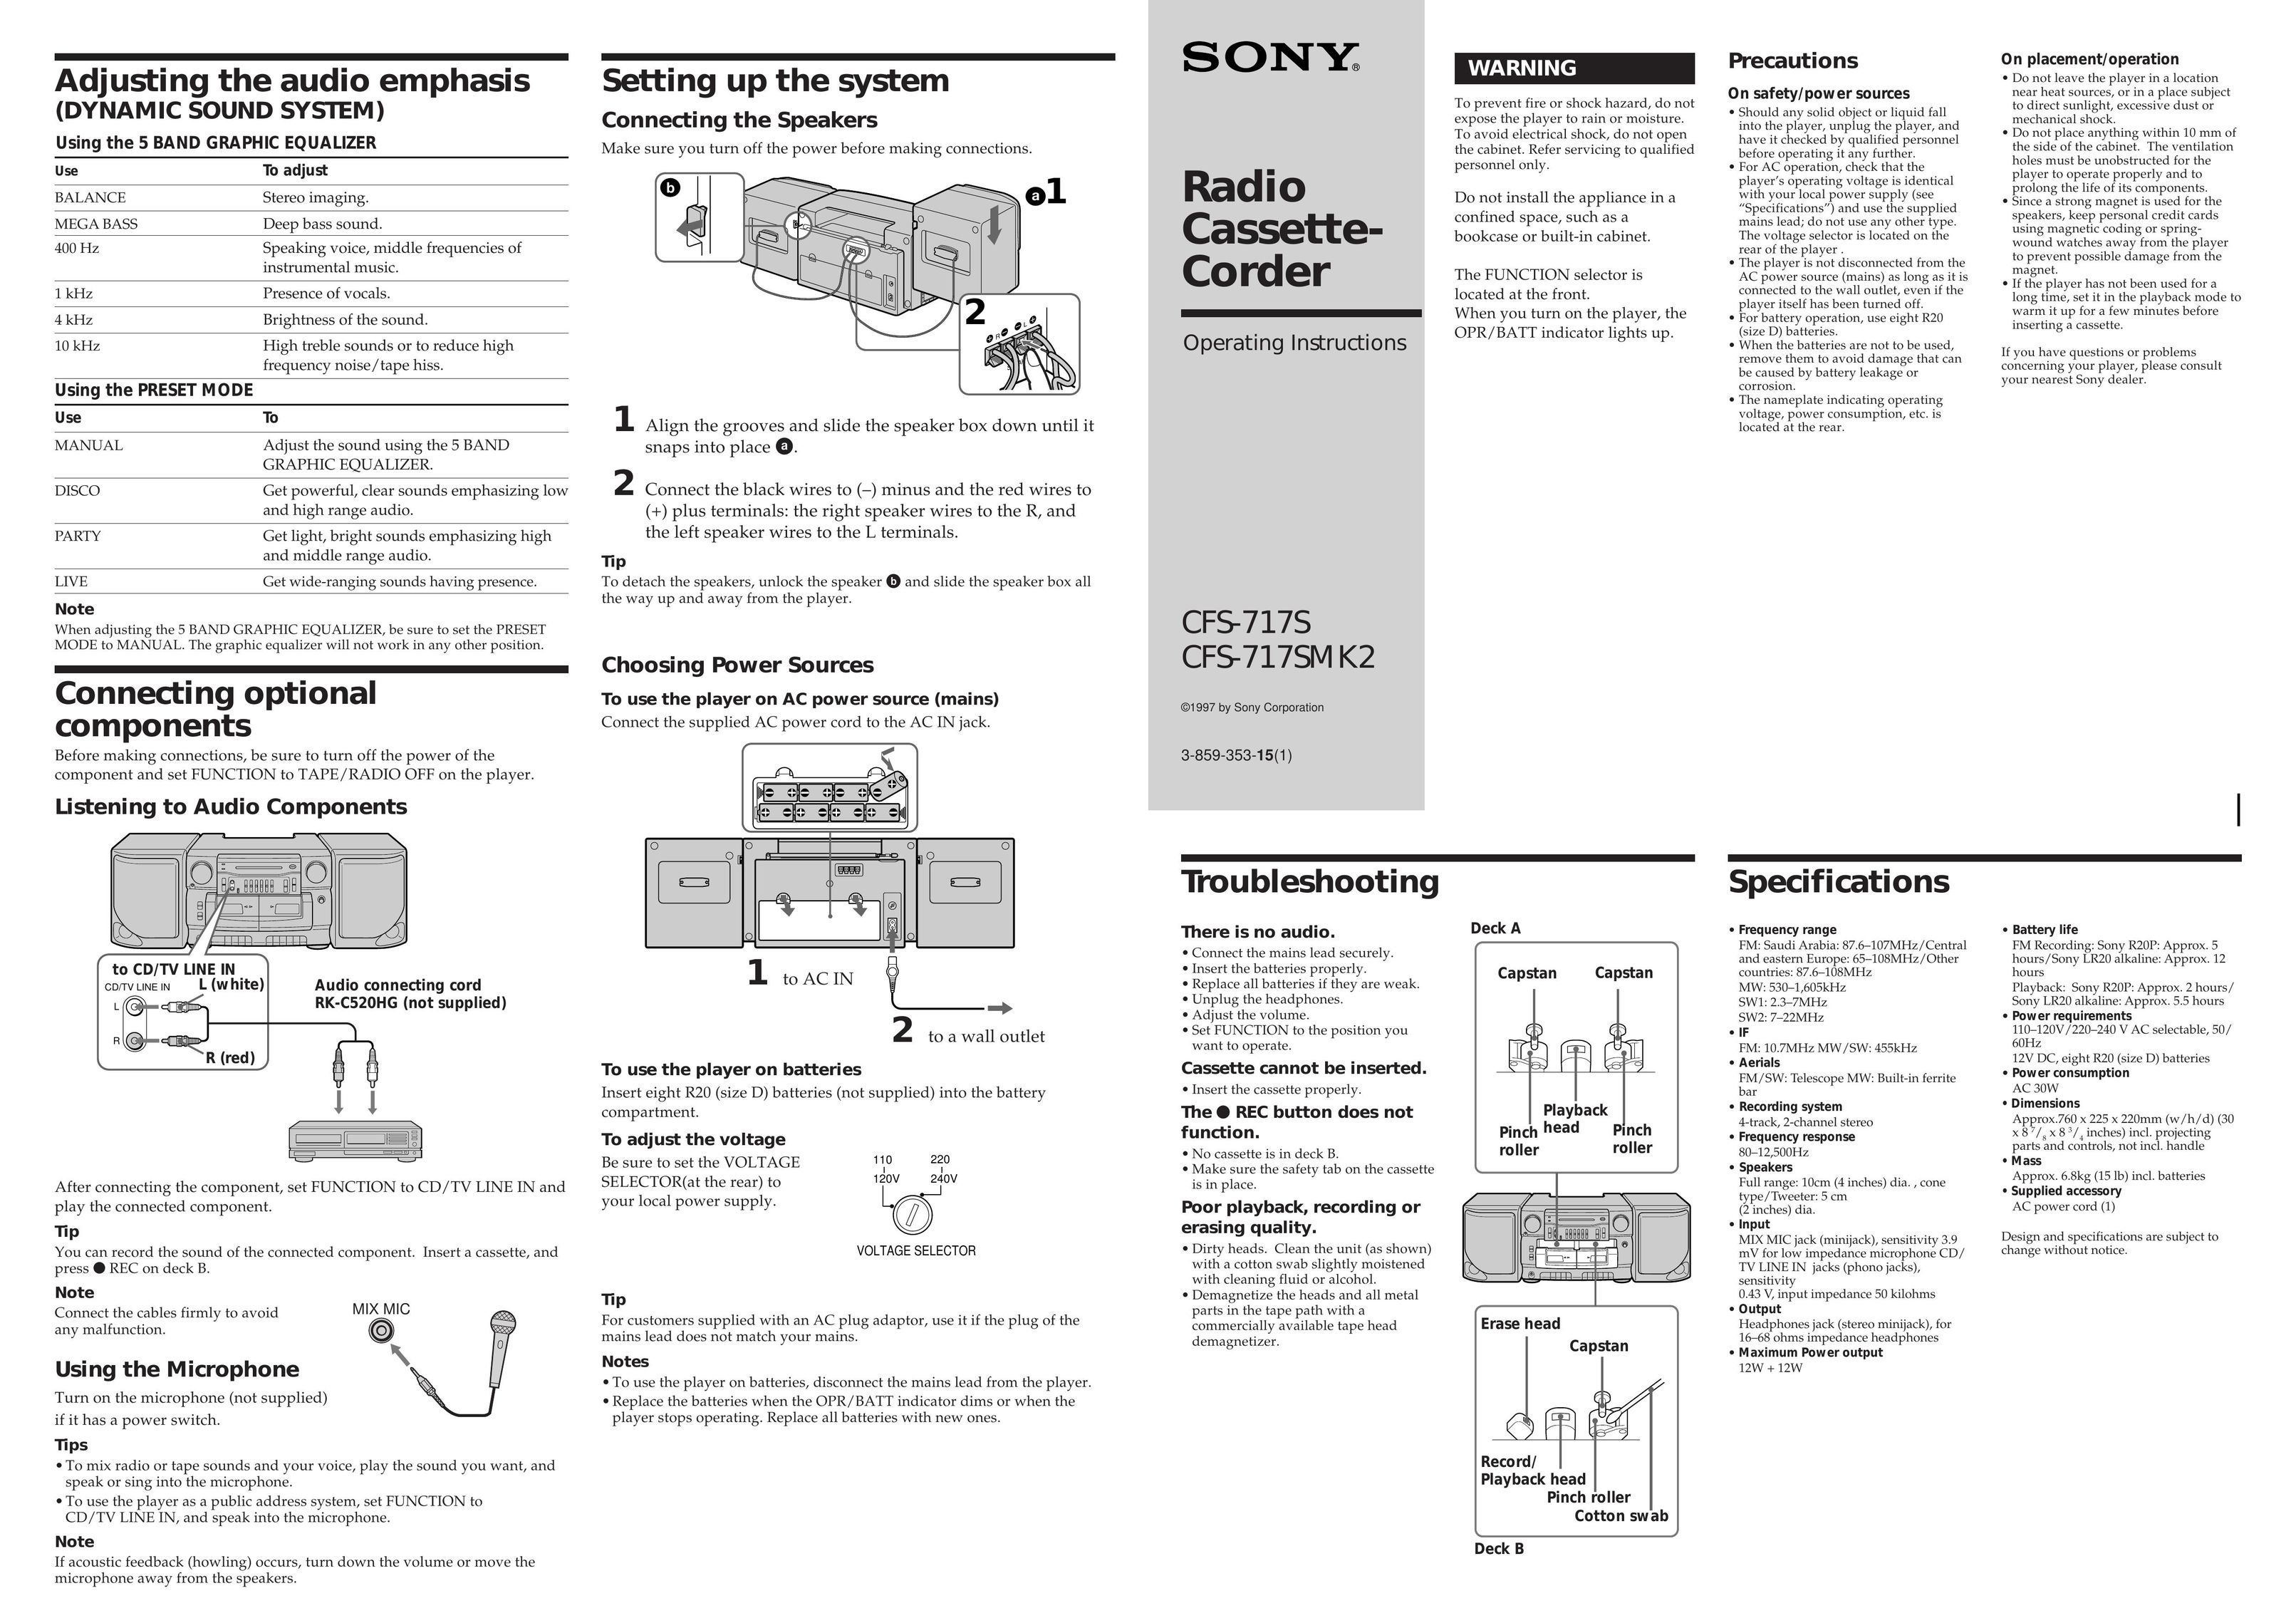 Sony CFS-717S Cassette Player User Manual